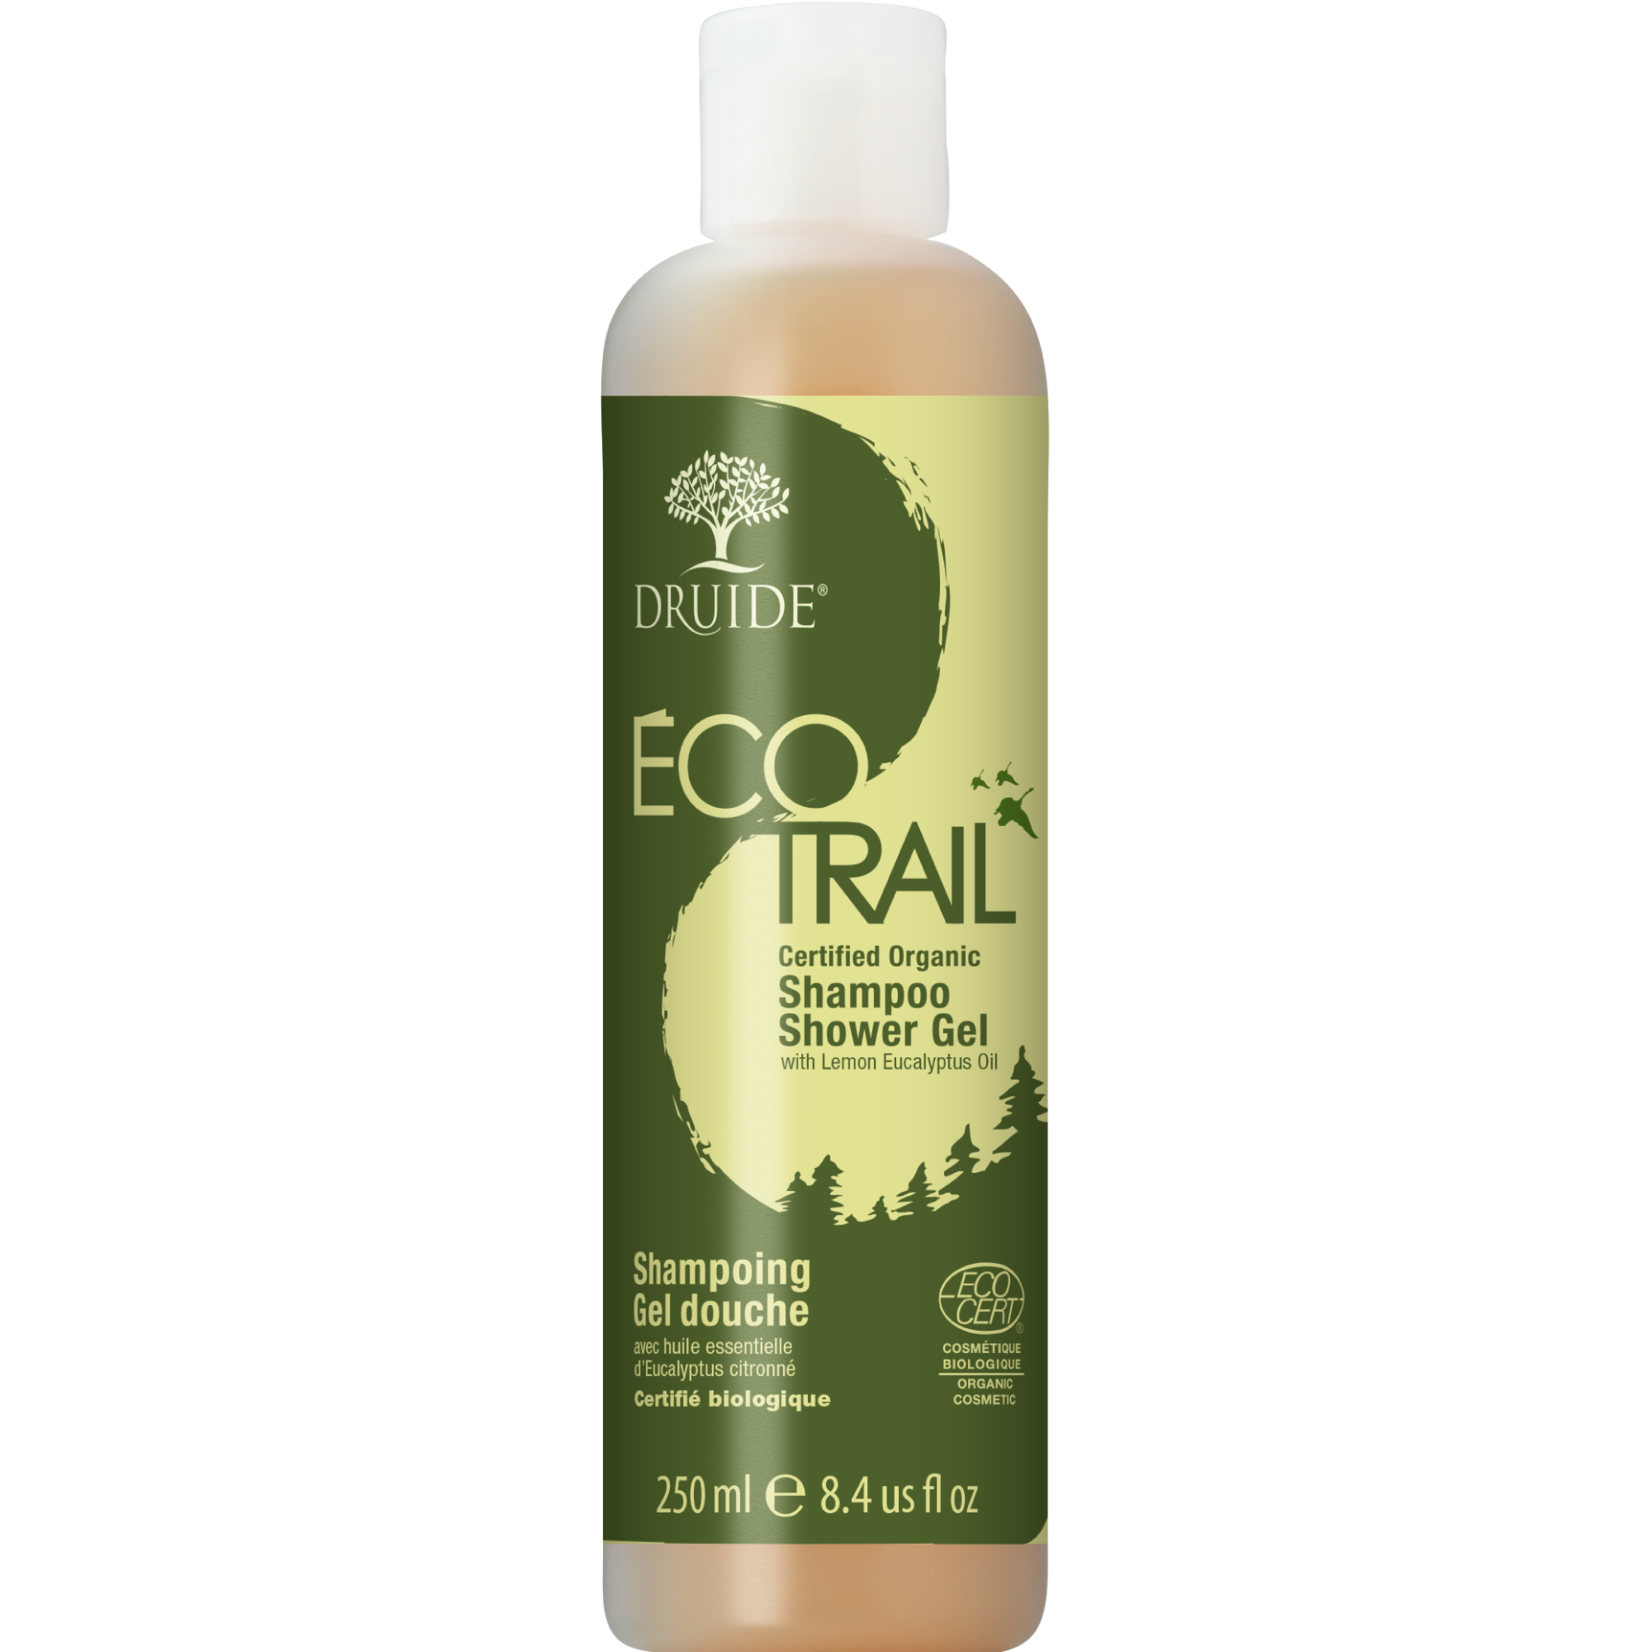 Druide Bio Ecotrail Shower Gel Shampoo 250ml